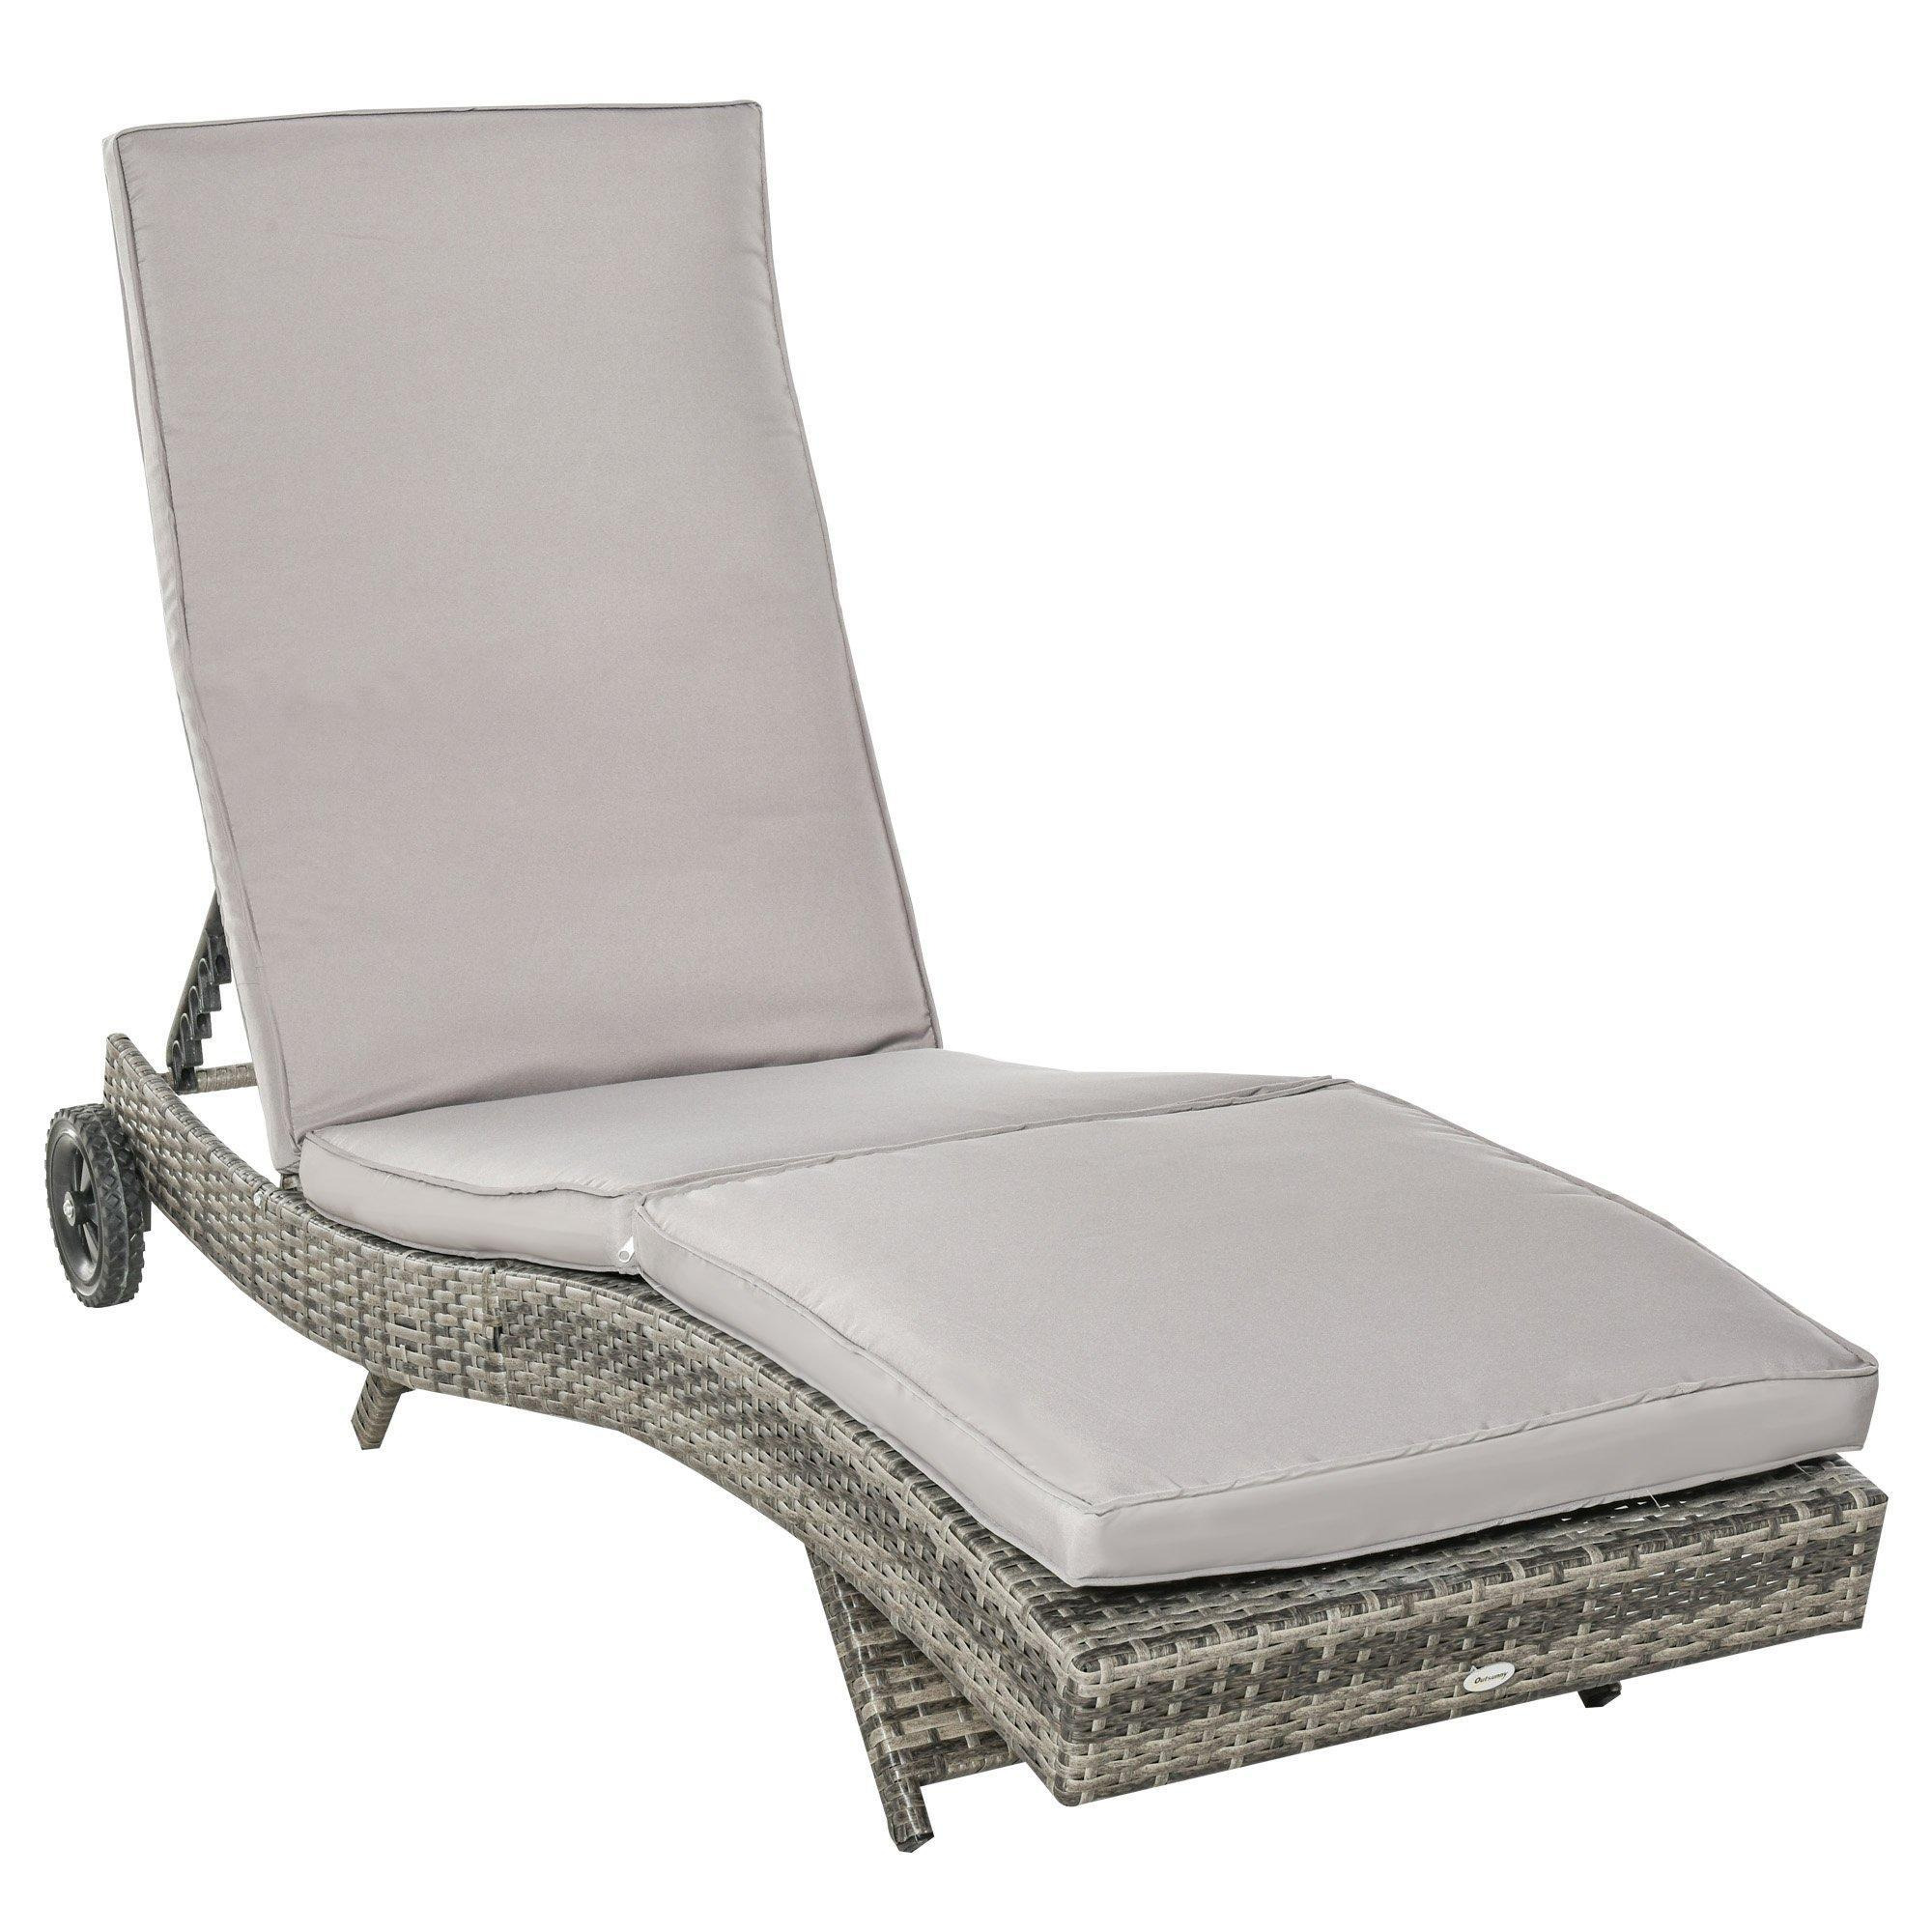 Outdoor Reclining Lounge Chair, PE Wicker, Rolling Wheels, Patio, Grey - image 1